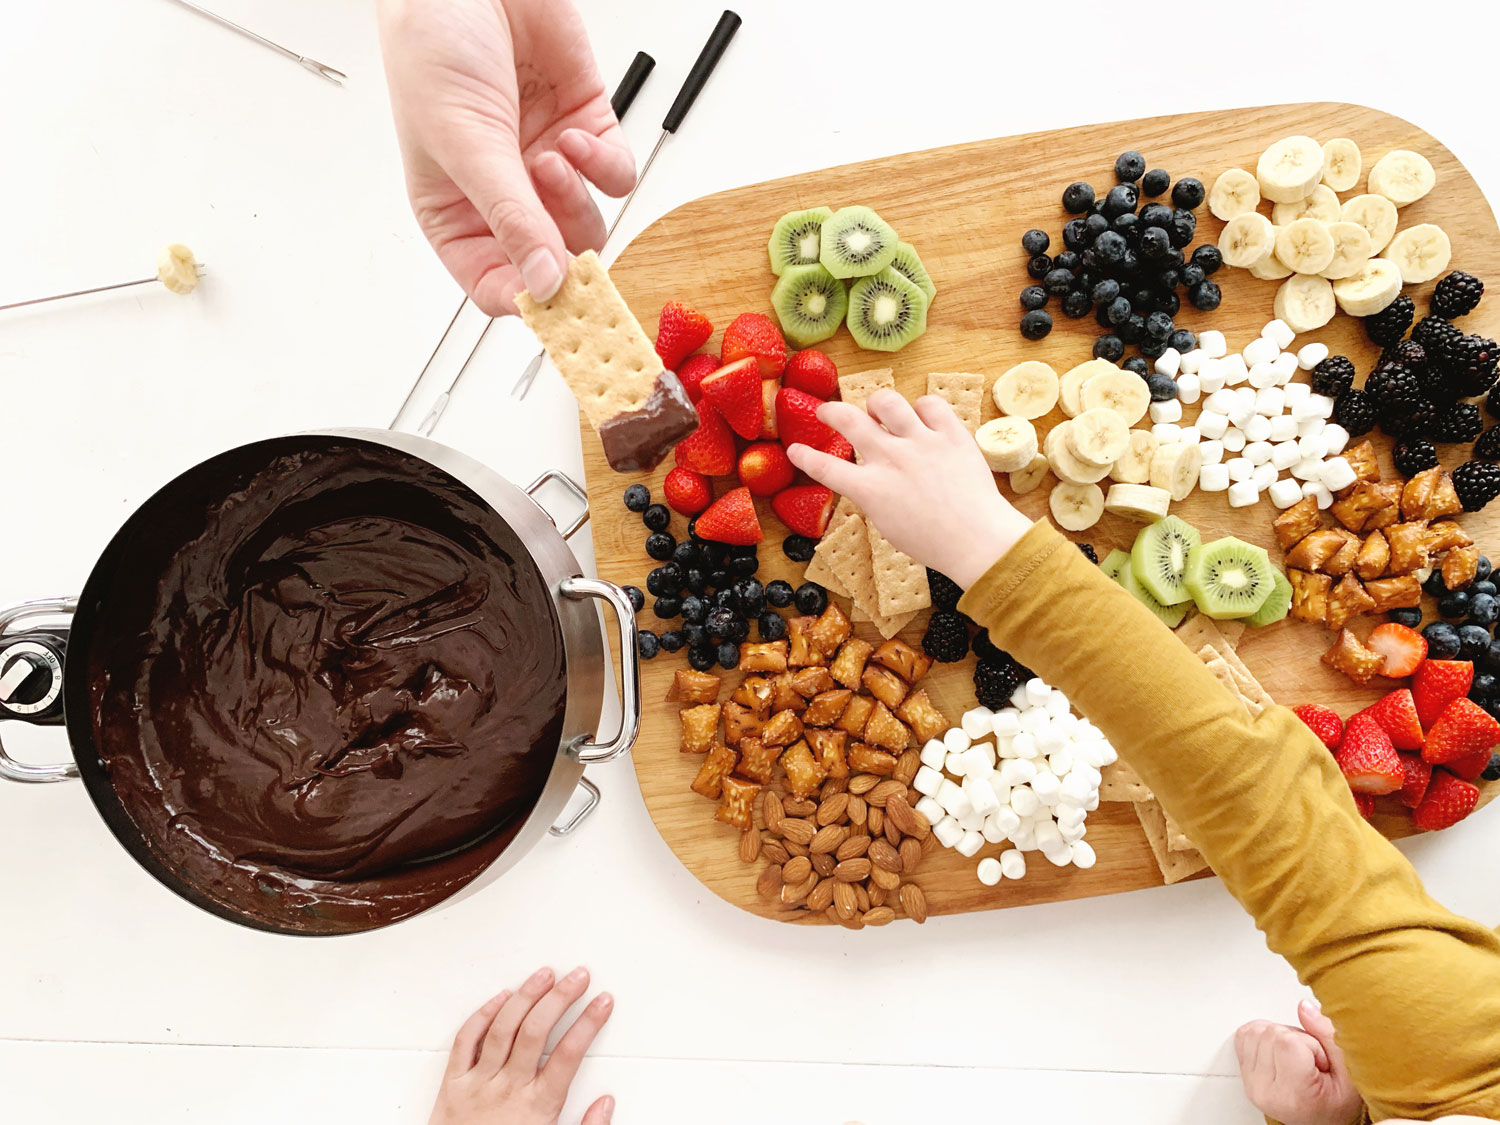 Easy and yummy chocolate fondue